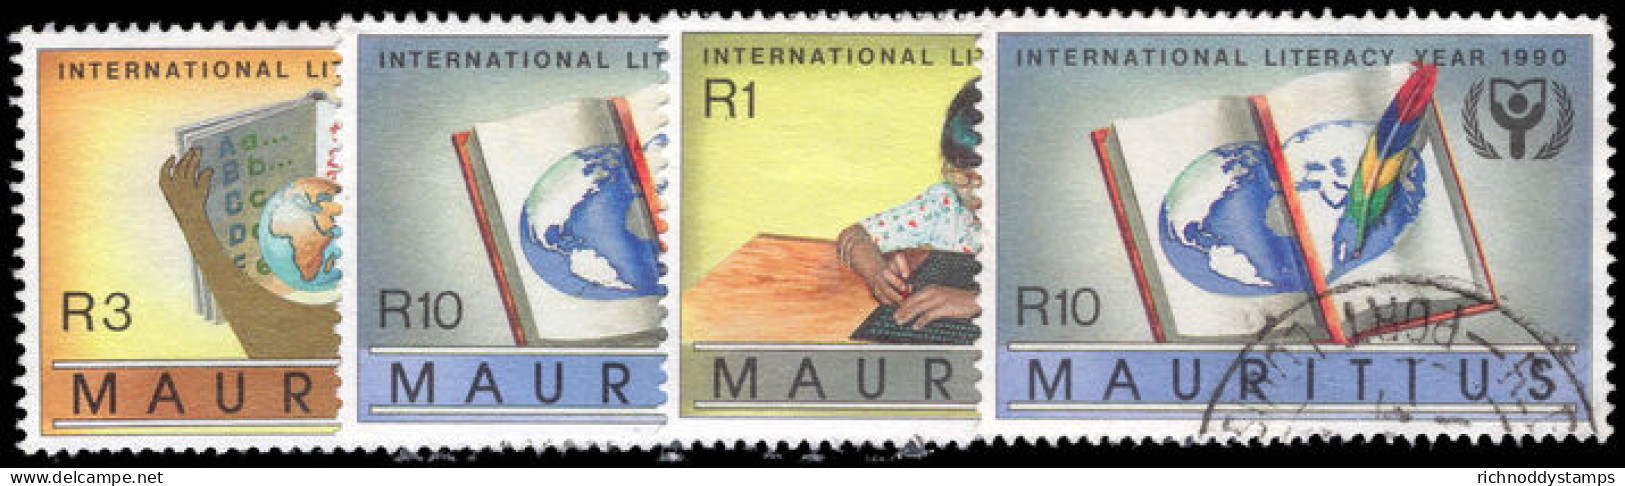 Mauritius 1990 International Literacy Year Fine Used. - Maurice (1968-...)